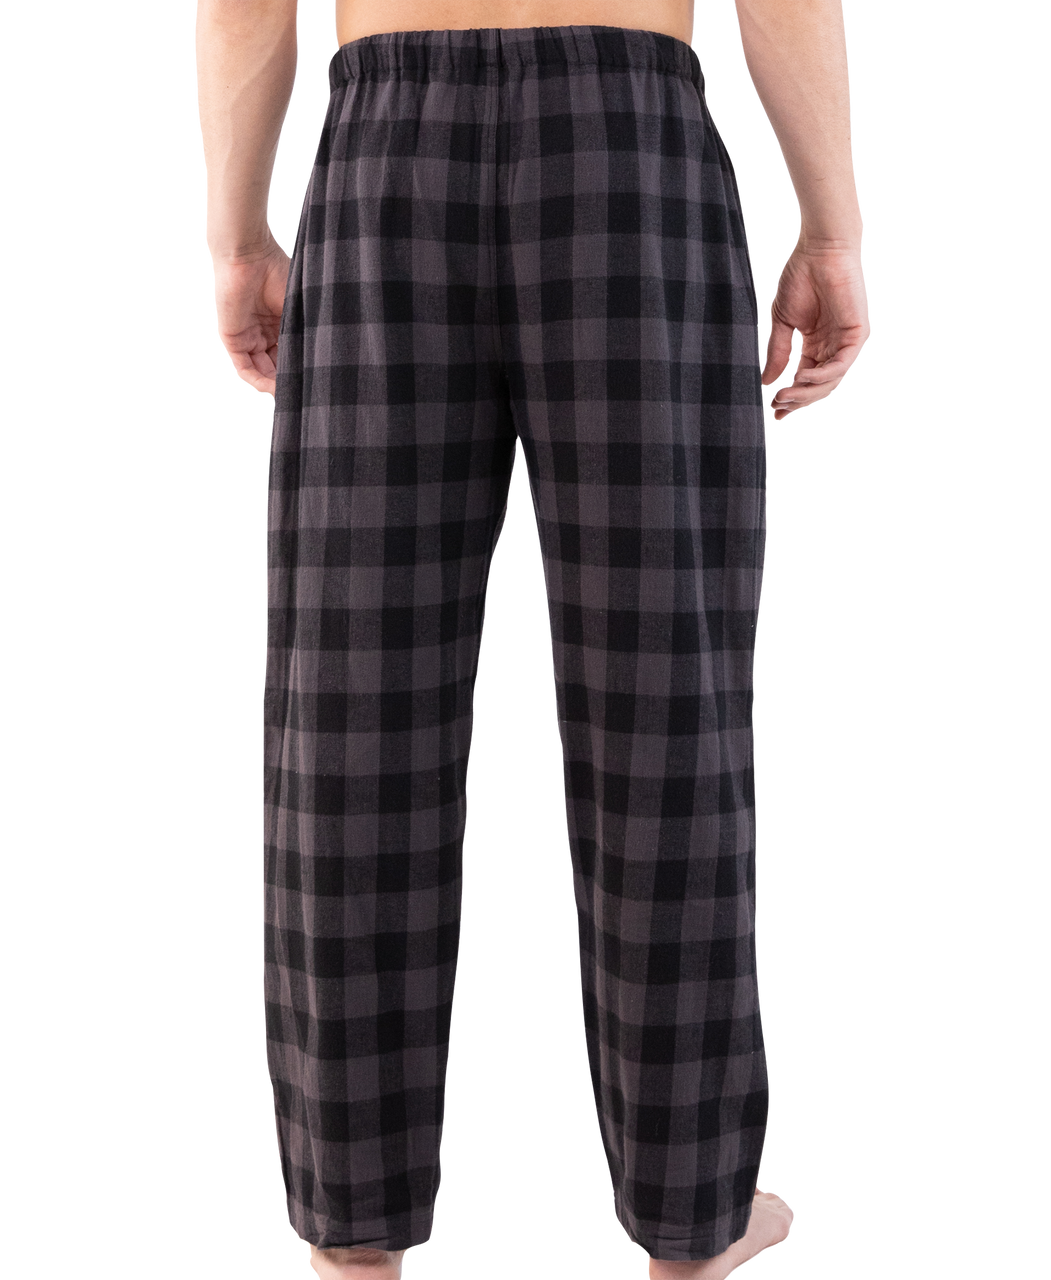 Grey Plaid Pajama Pants - Shop on Pinterest